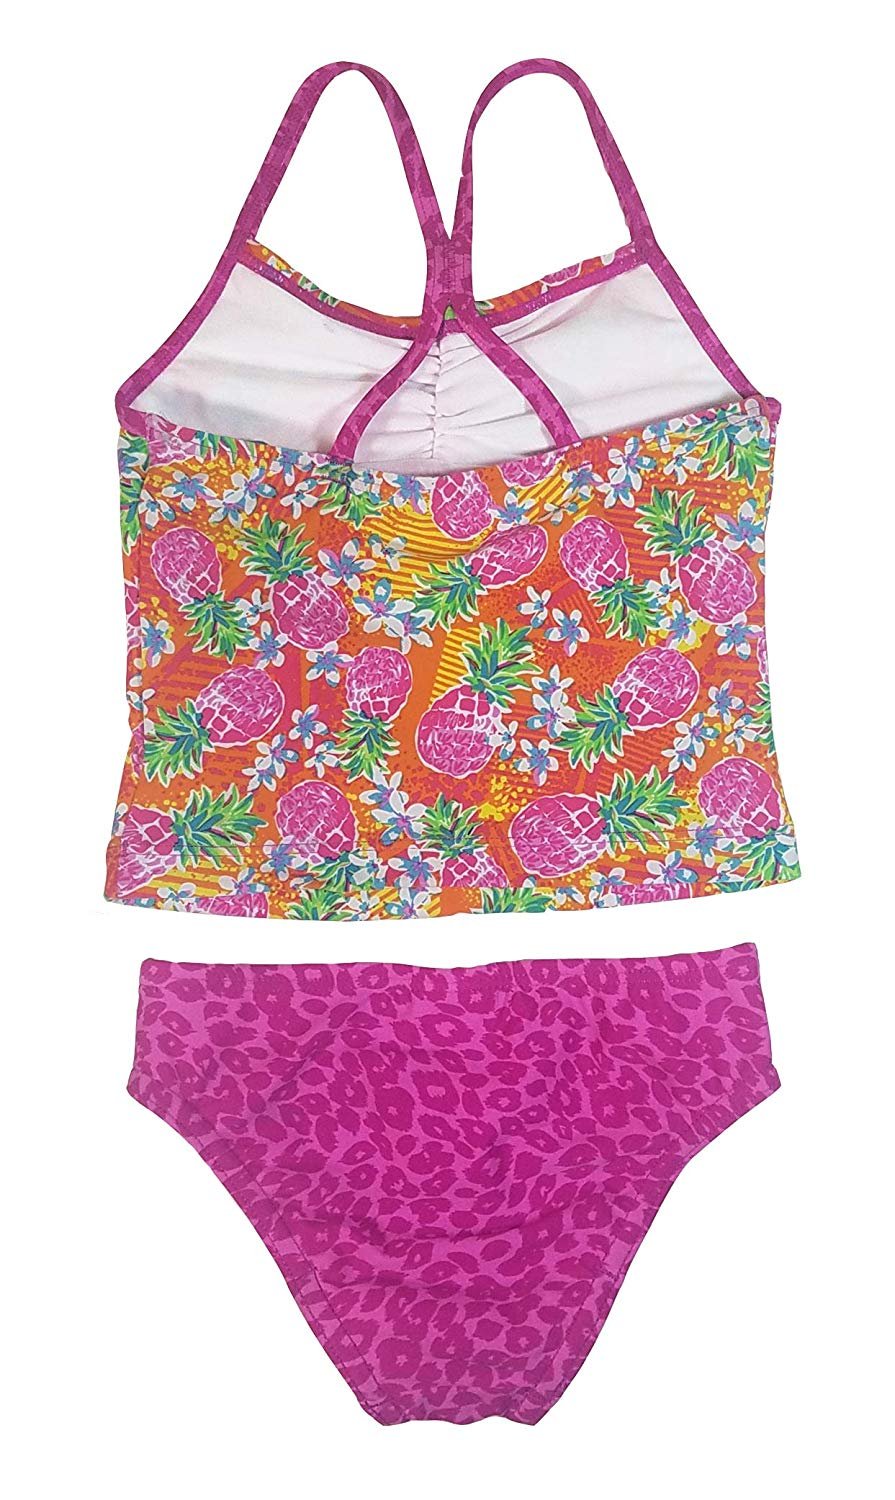 Speedo Girl's Sporty Splice Tankini 2 Piece Swimsuit (16, Pink/Pineapple) - image 2 of 2